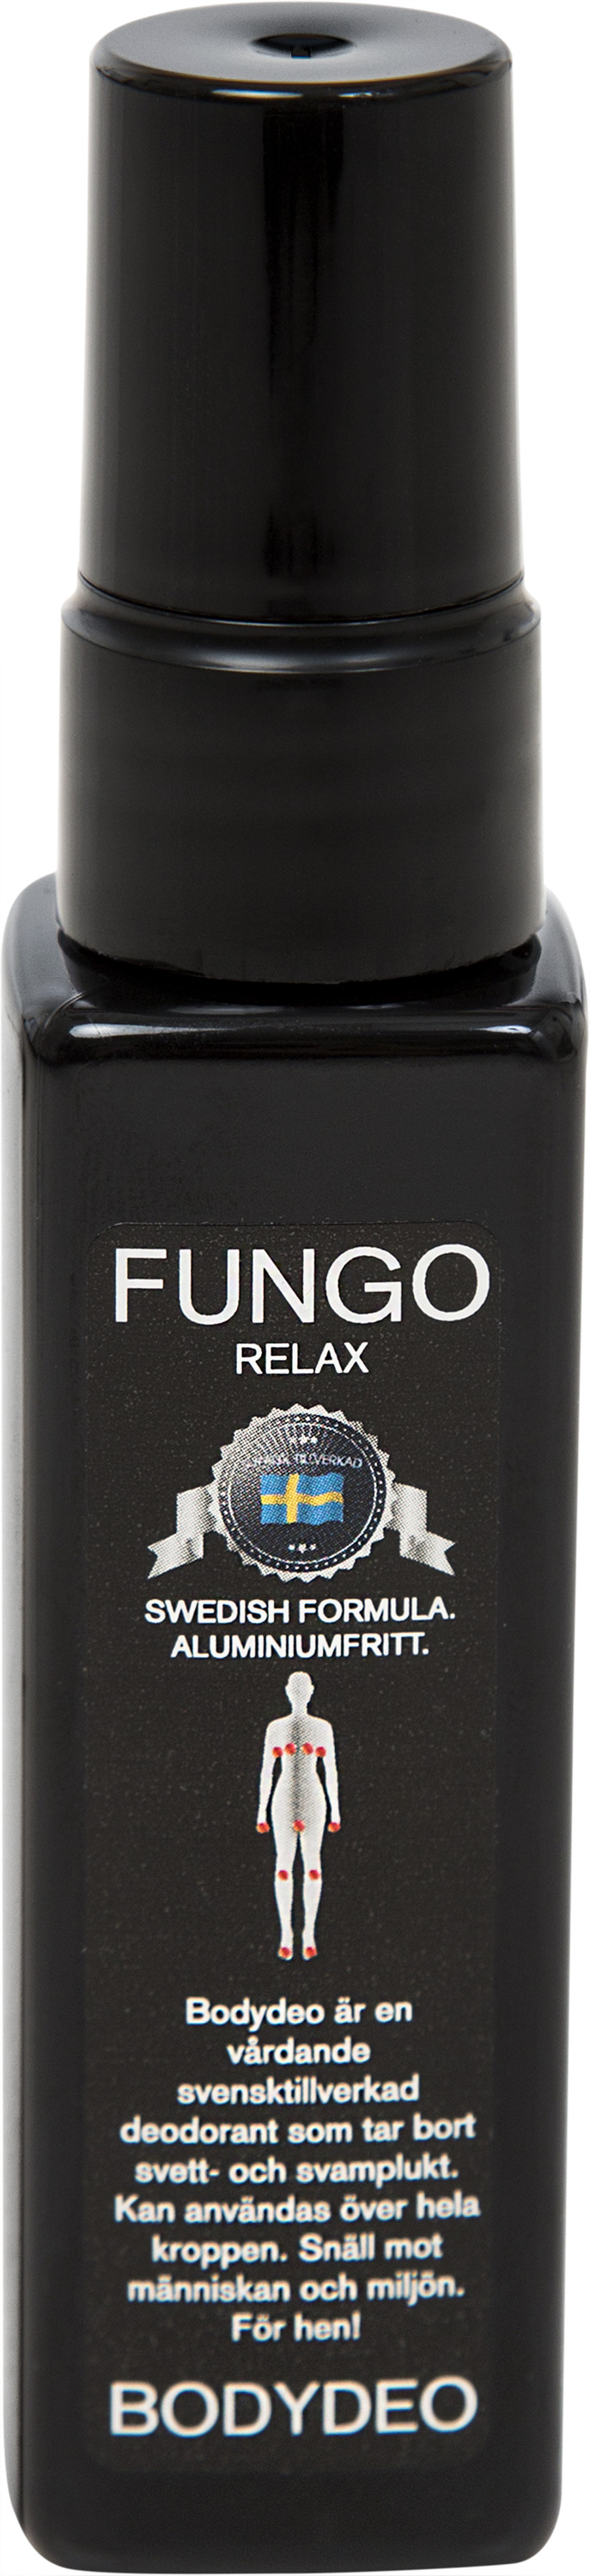 Fungo Bodydeo Relax Kroppsdeodorant 69 g